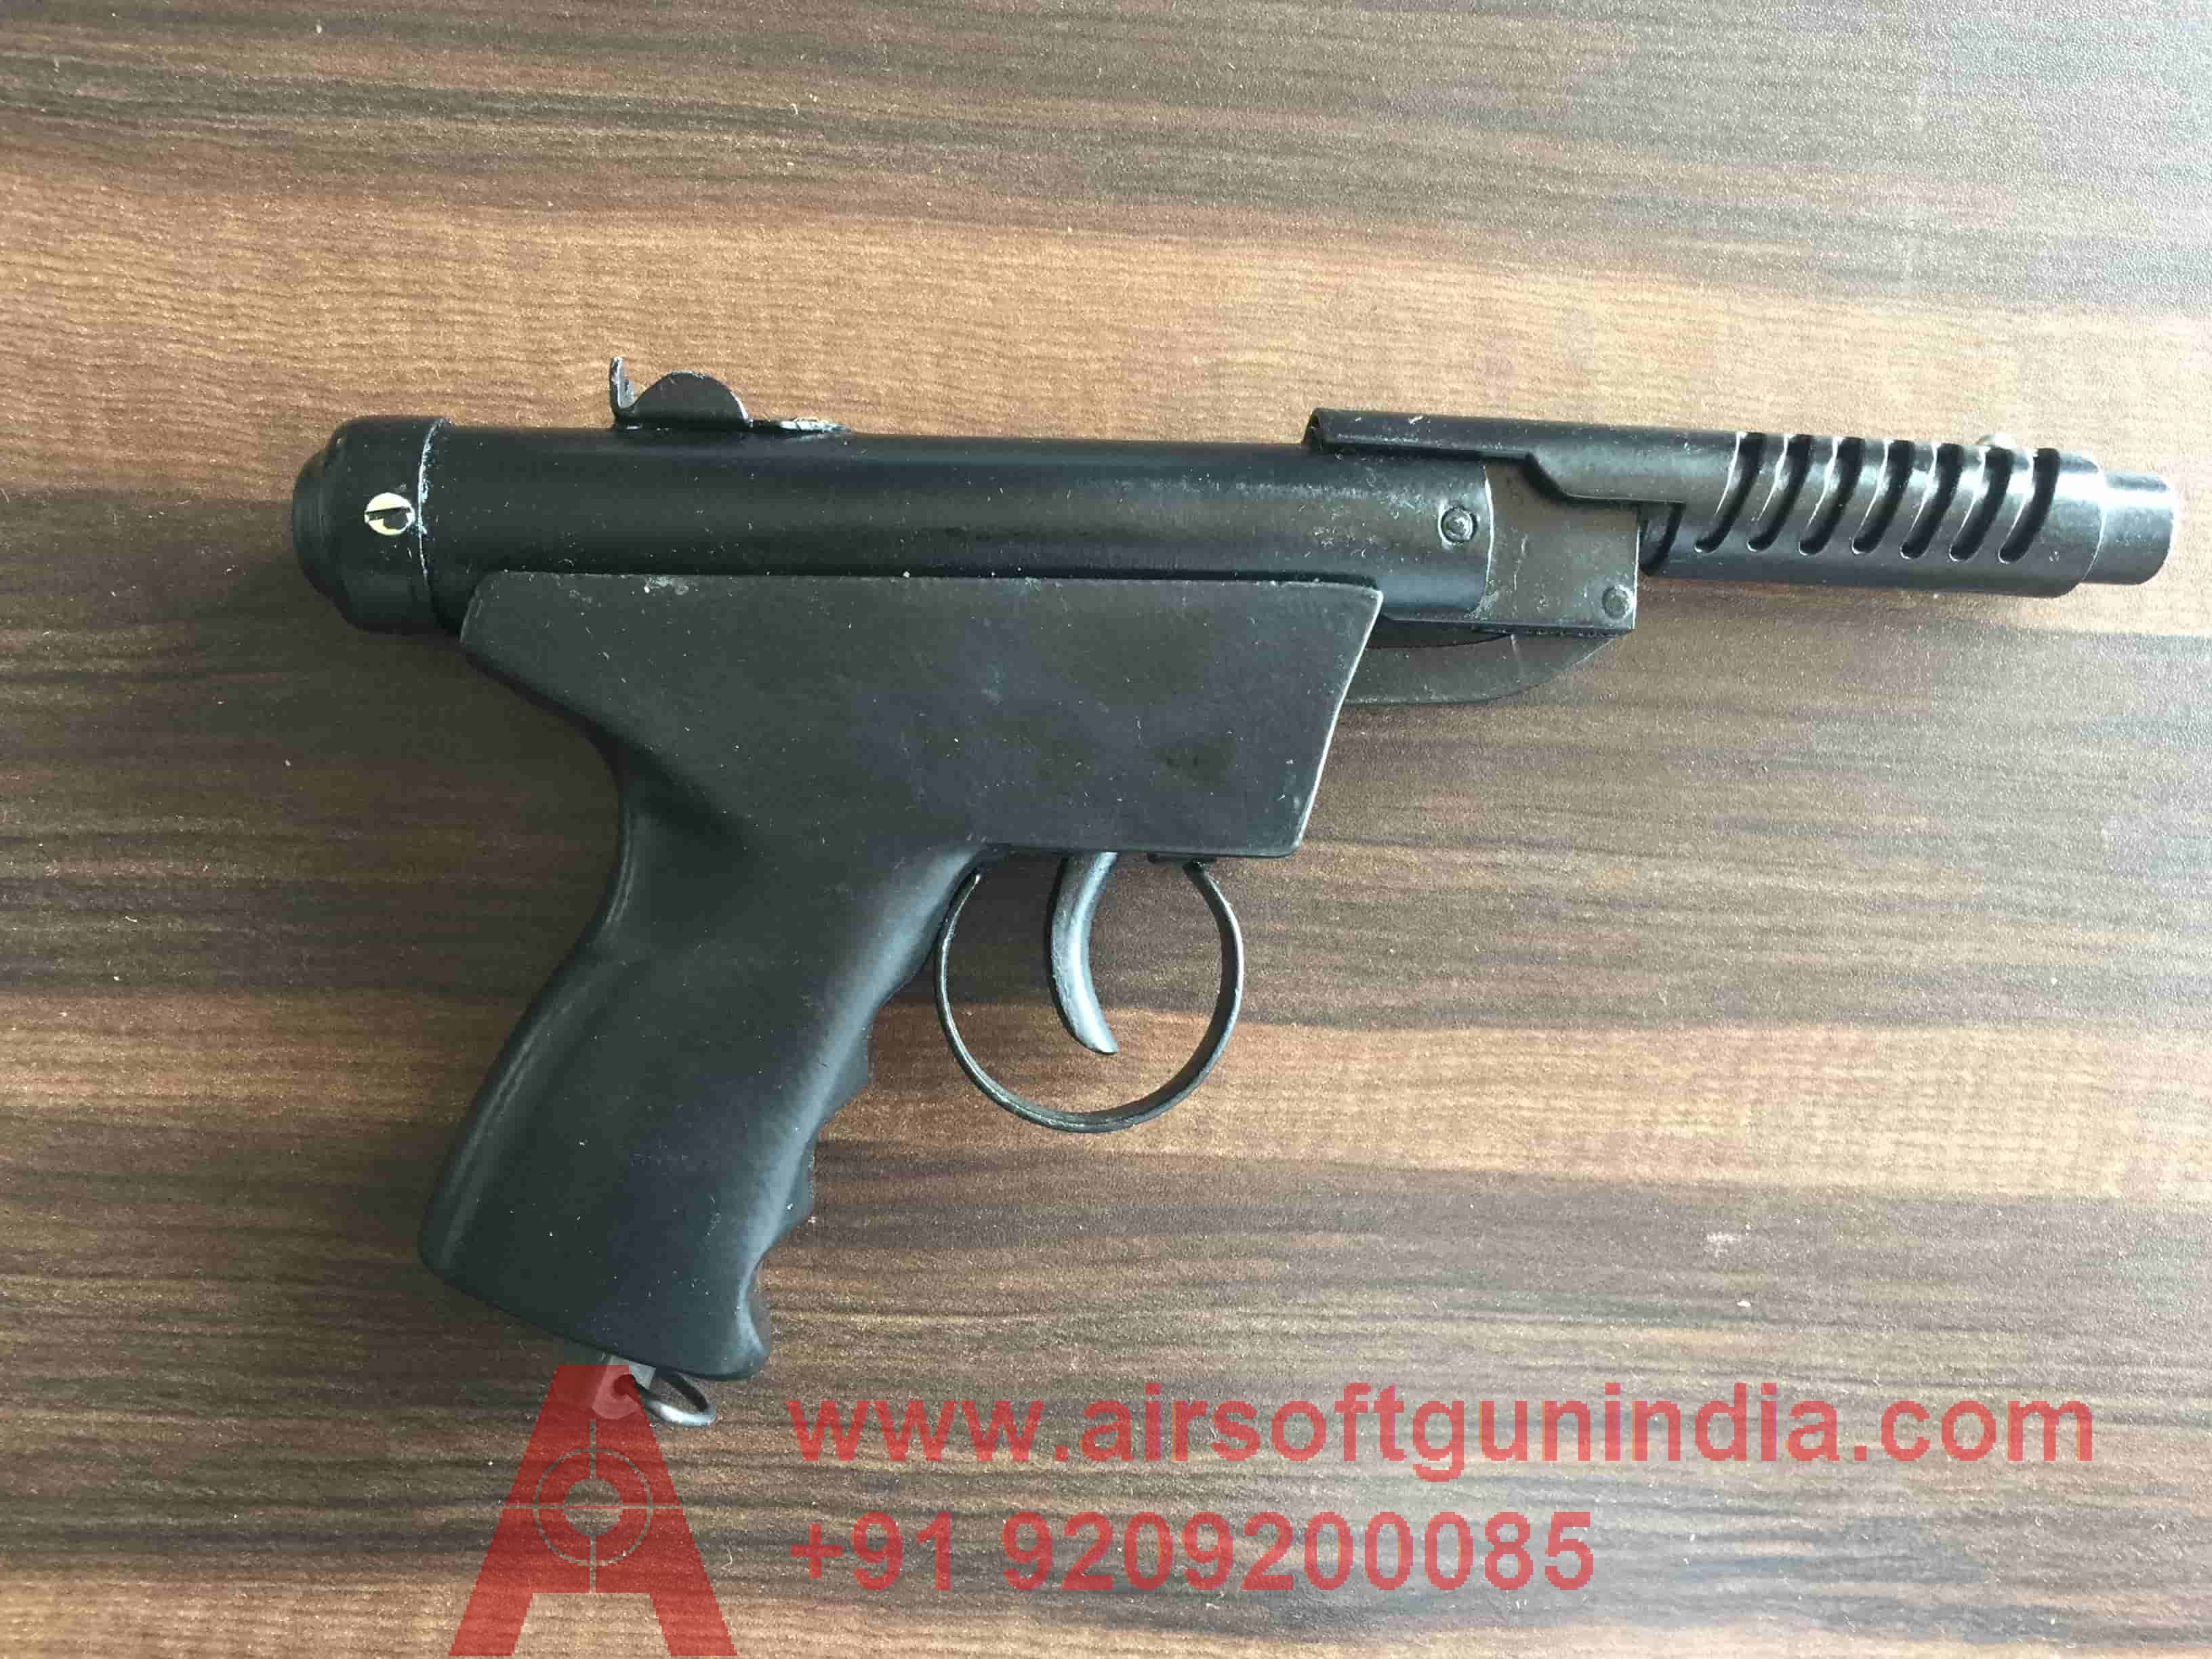 Bond Series 2  Metal Single-Shot .177 Caliber / 4.5 Mm Indian Air Pistol By Airsoft Gun India